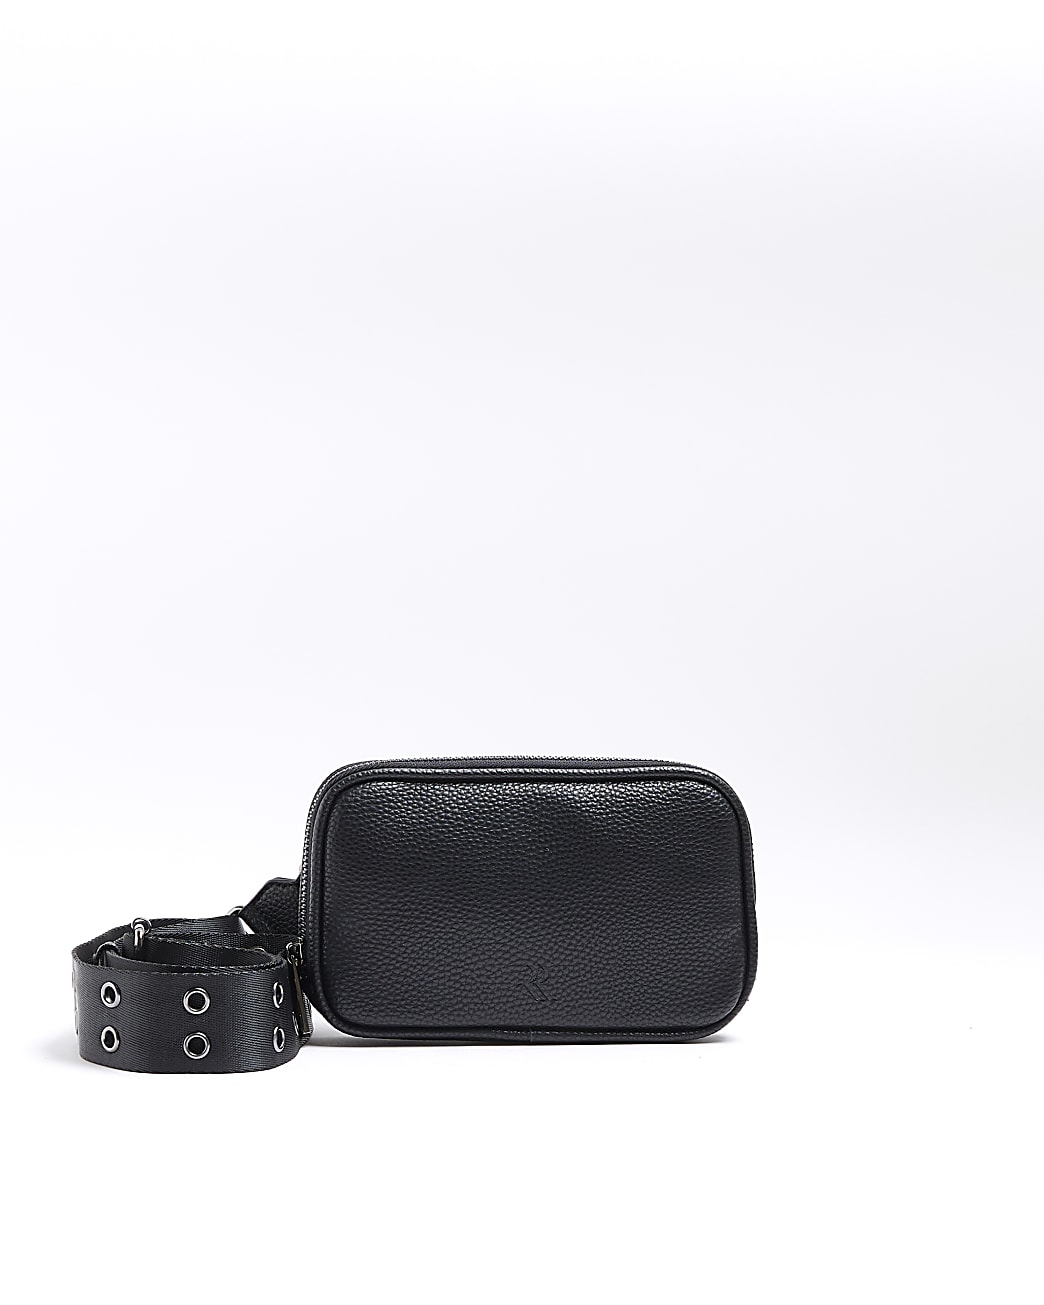 riverisland.com | Black Faux Leather Zip Cross Body Bag